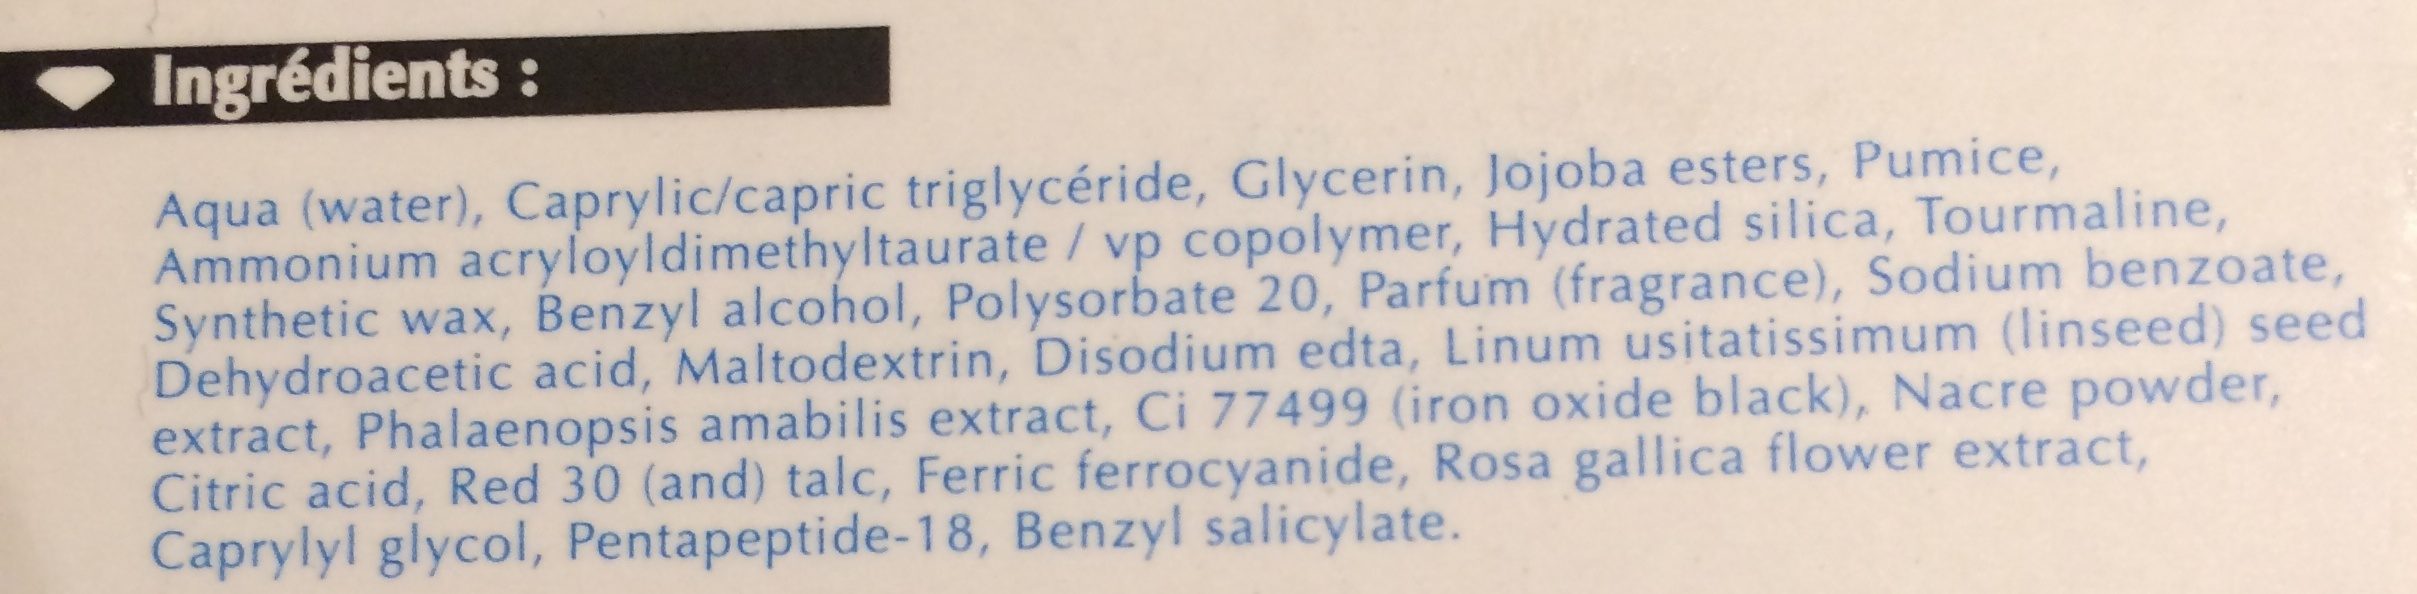 Gemology Perle De Tendresse 50 ML - Ingredients - fr